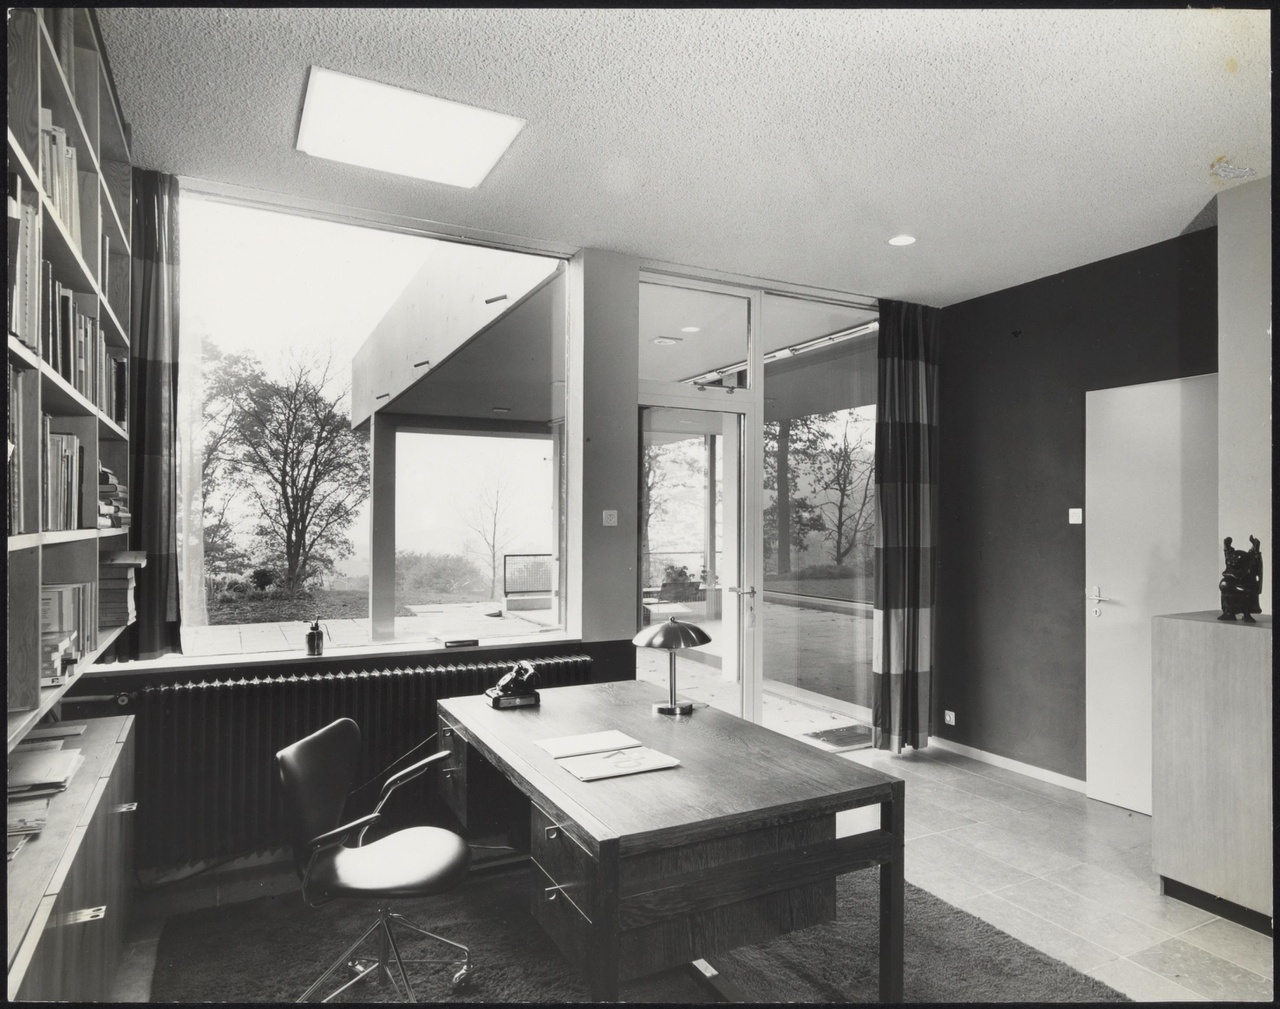 Afbeelding van woning Van Slobbe, Heerlen, 1964, interieur studeerkamer